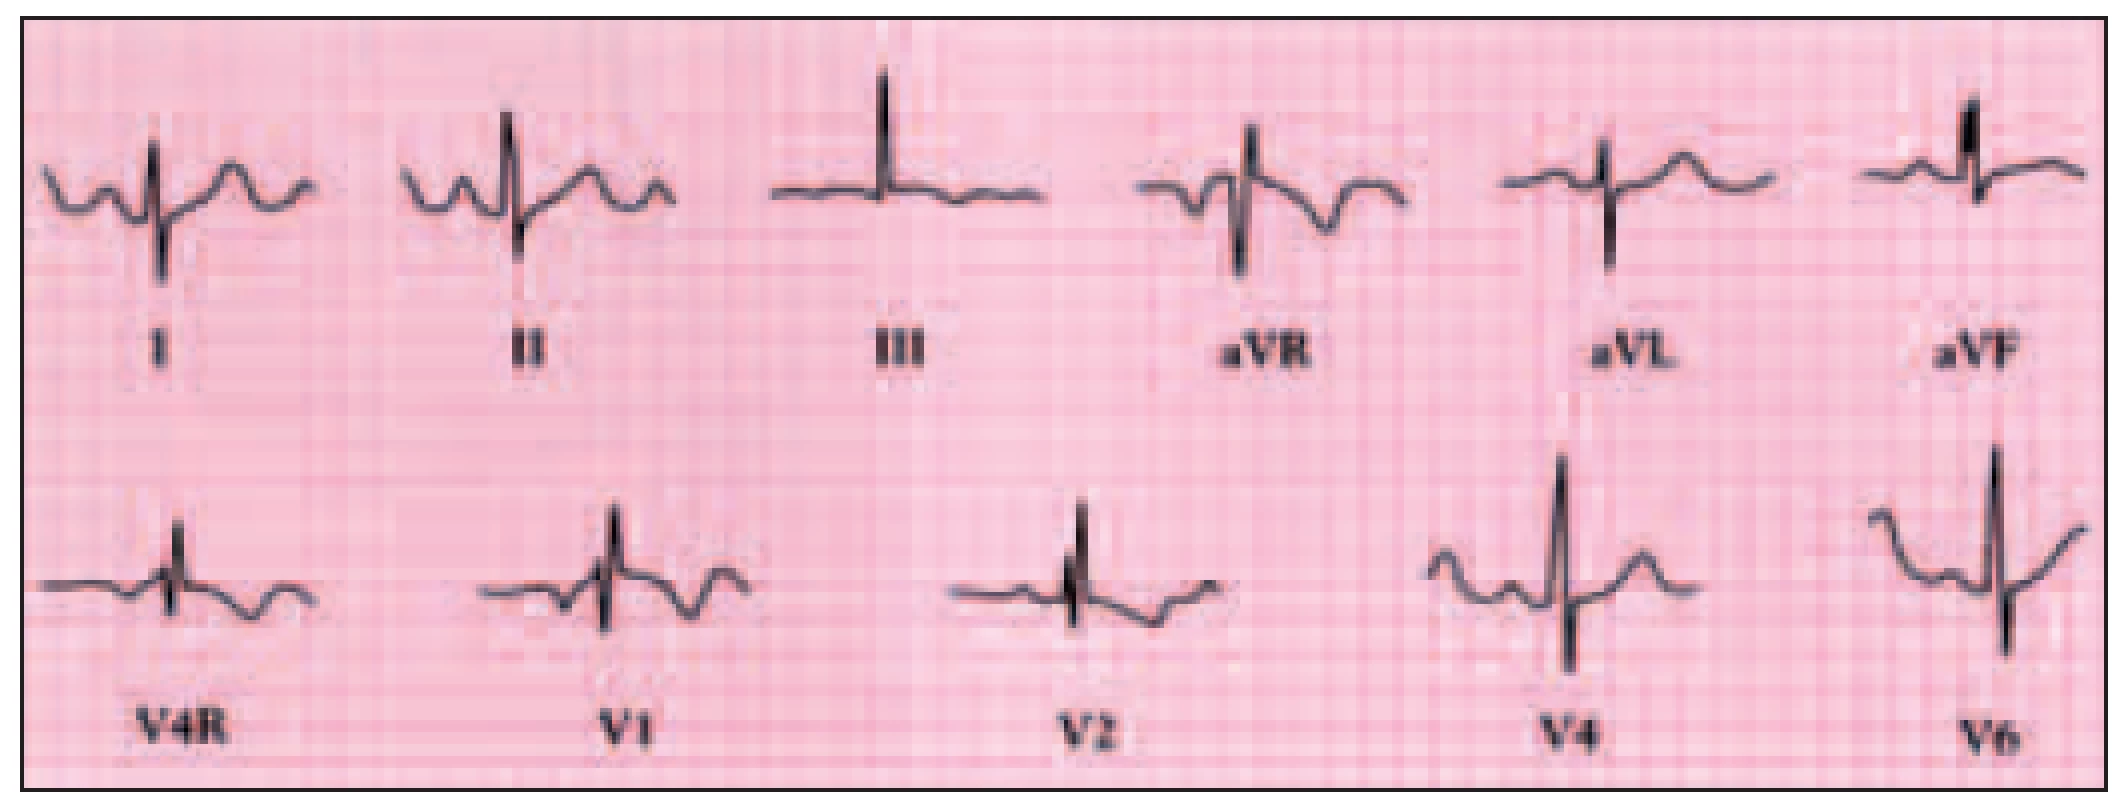 Elektrokardiogram pacienta s defektem septa síní typu ostium secundum ukazuje sinusový rytmus, deviaci osy doprava, komplexy rsR’ od V4R do V4 vlivem nekompletní blokády pravého raménka.